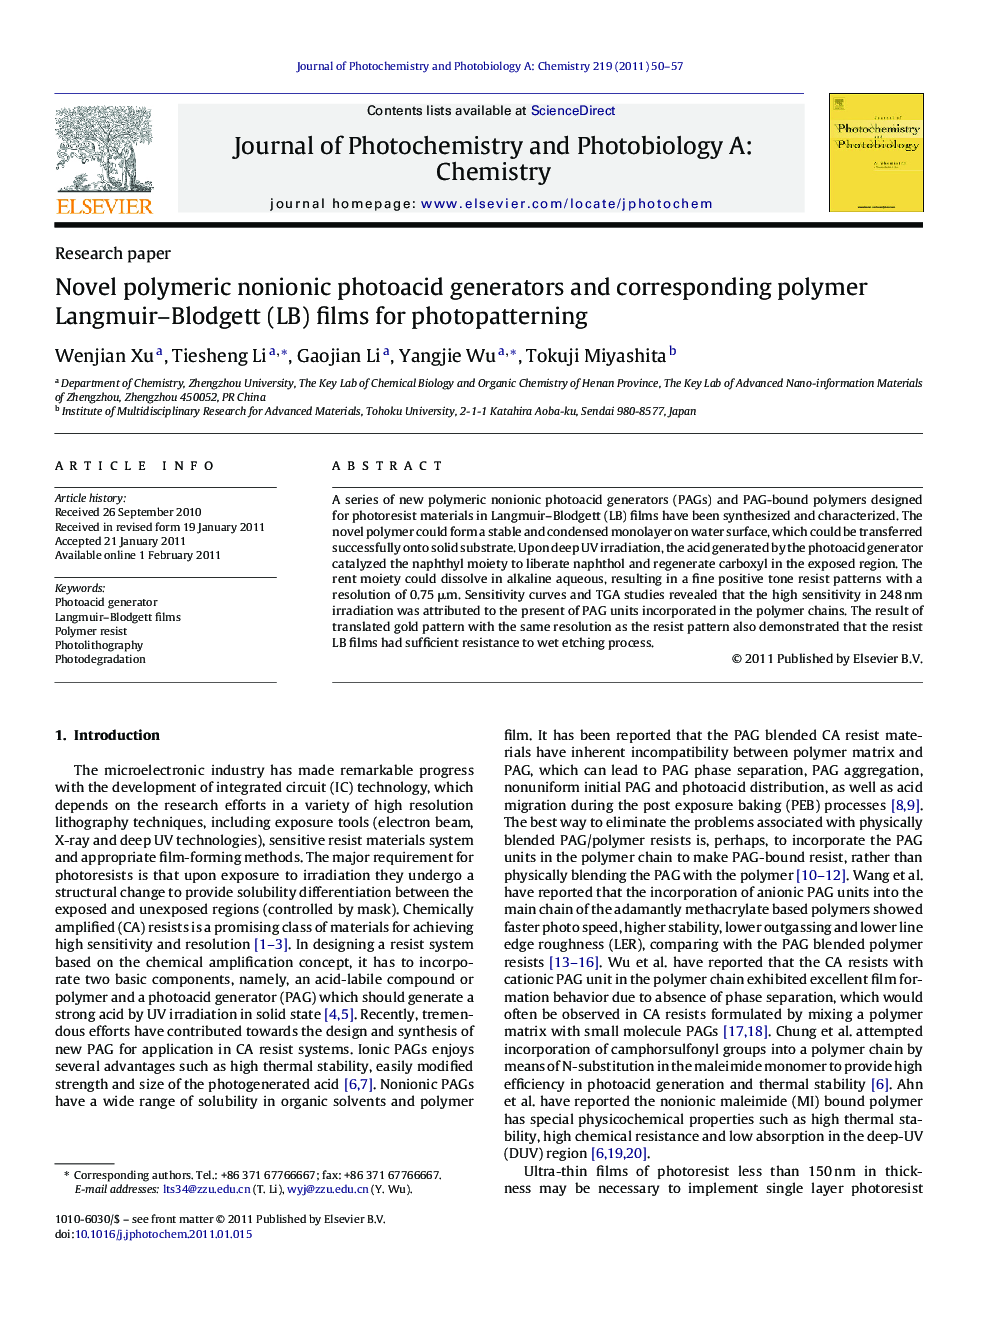 Novel polymeric nonionic photoacid generators and corresponding polymer Langmuir–Blodgett (LB) films for photopatterning